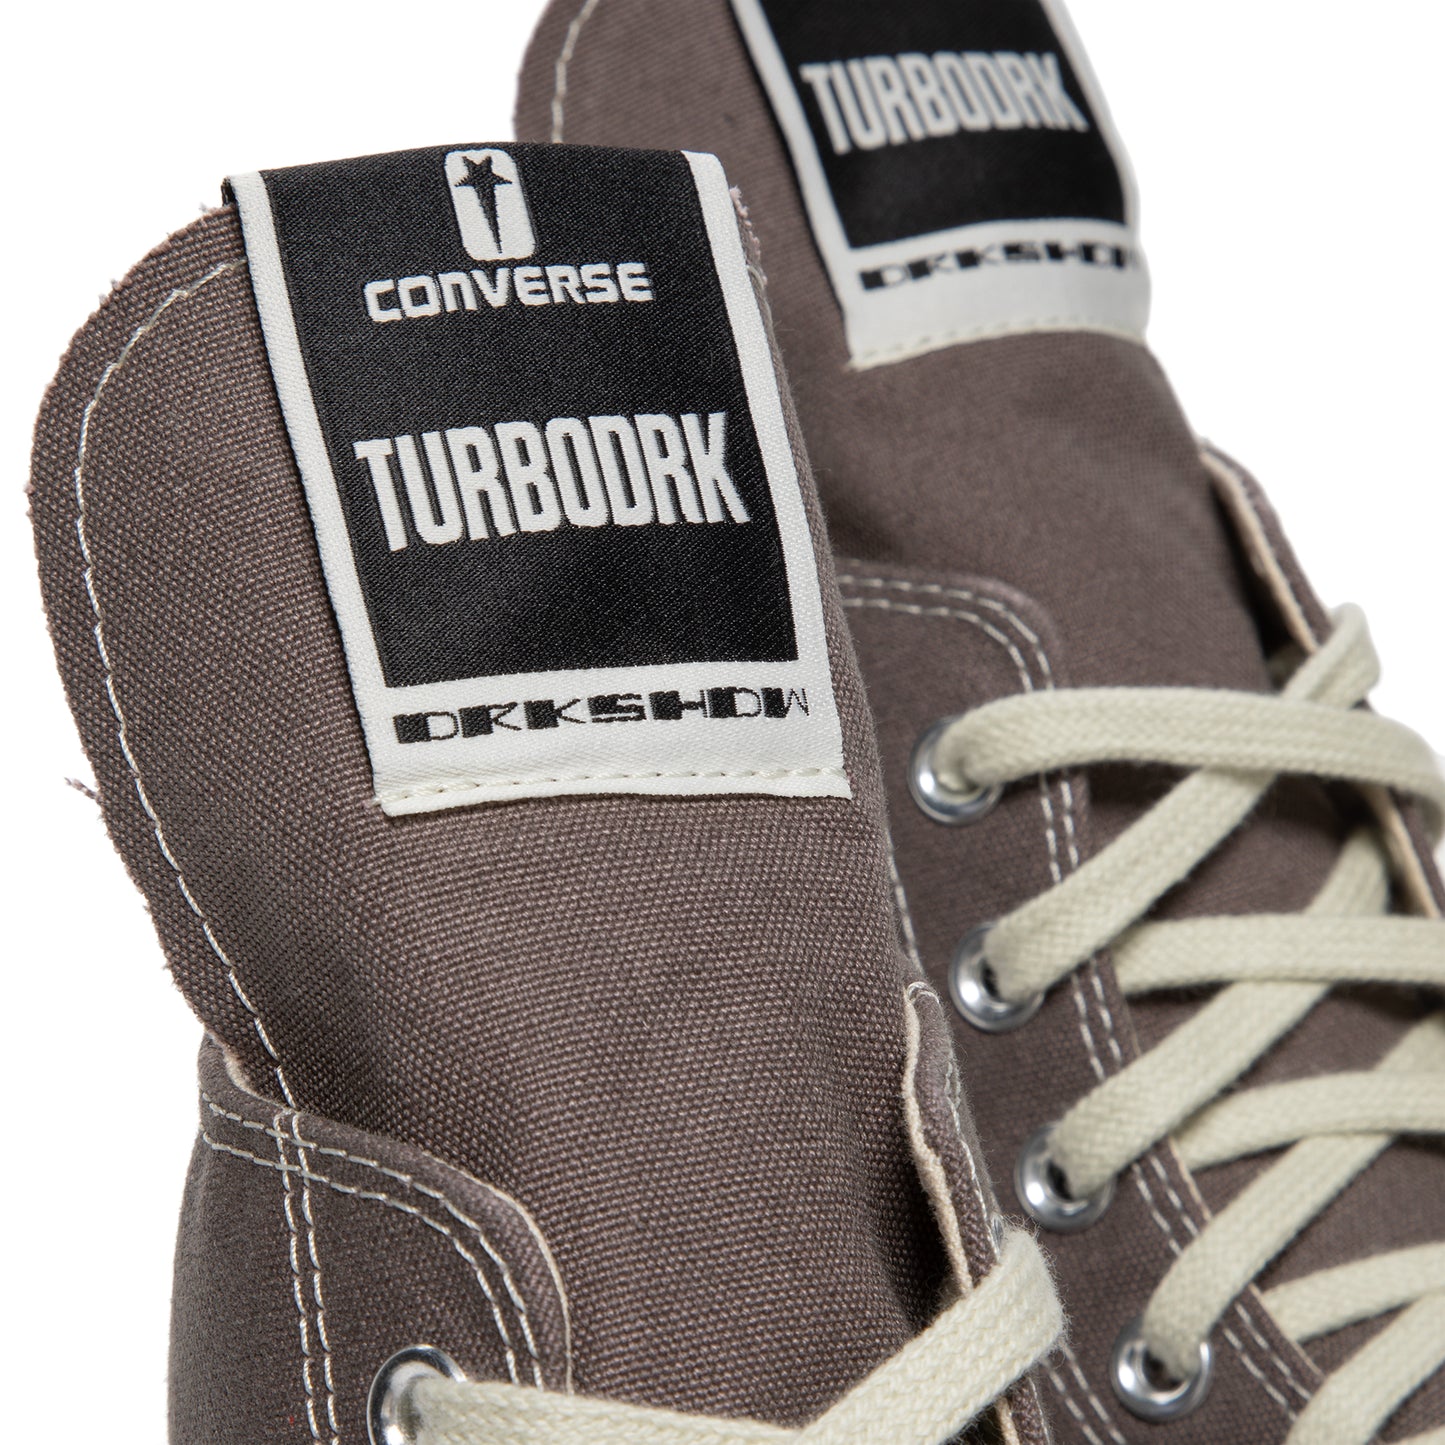 Converse TURBODRK Laceless Hi (Iron/Egret)